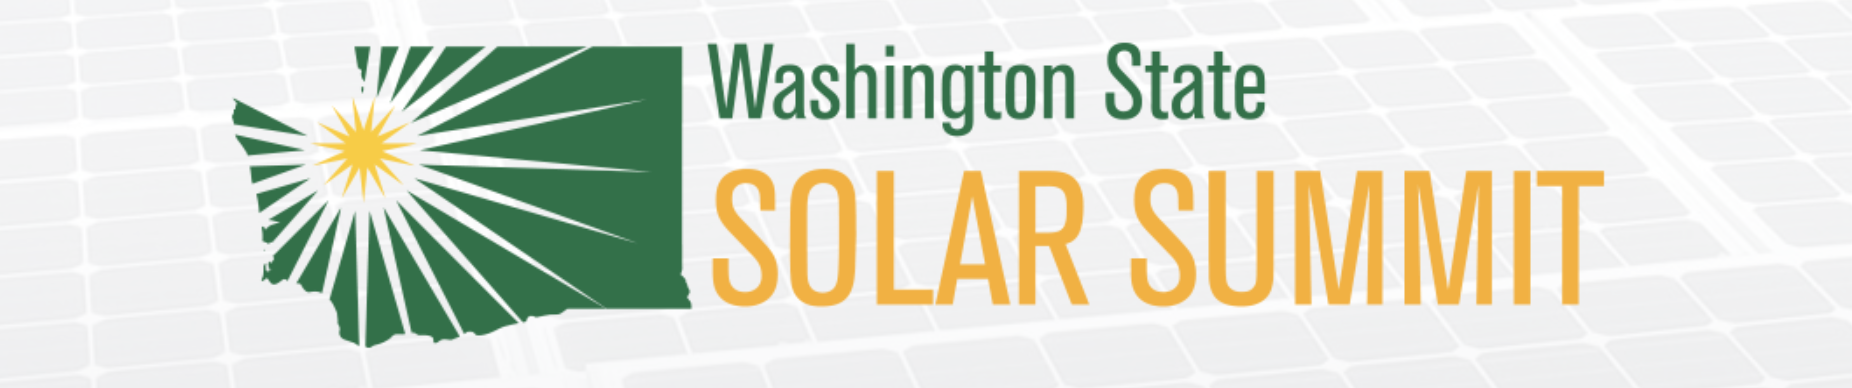 Washington State Solar Summit